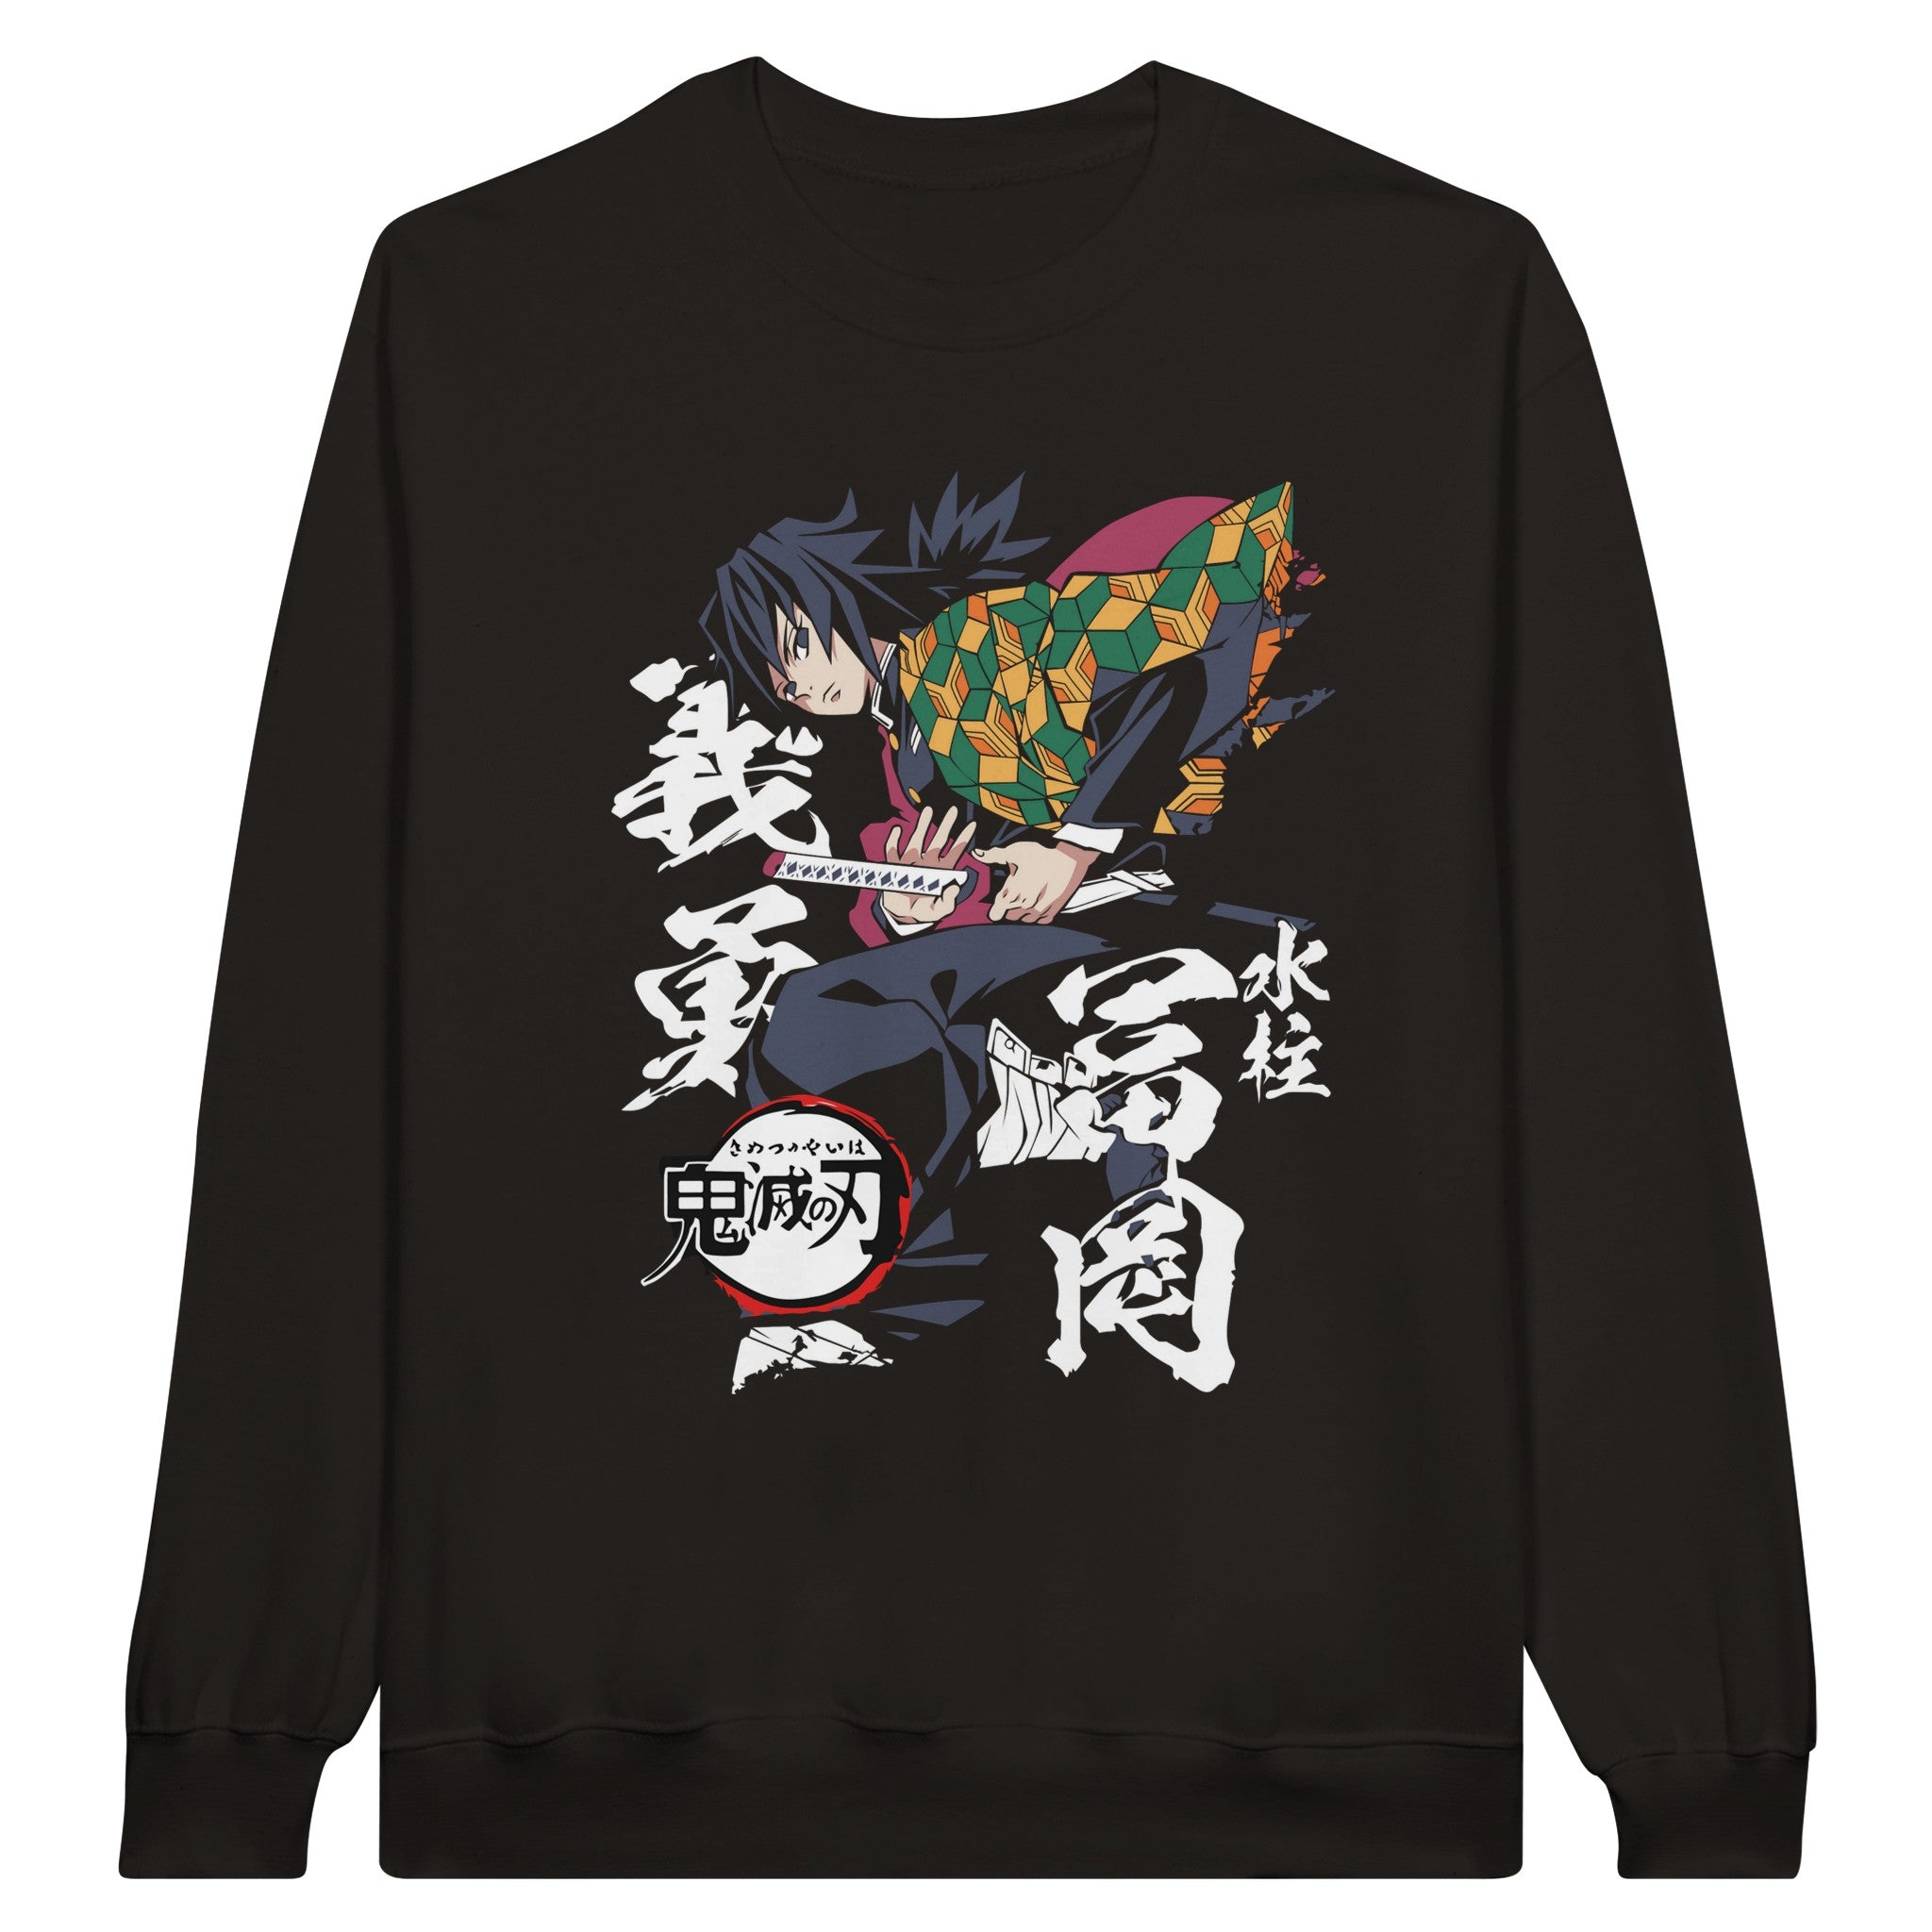 shop and buy demon slayer anime clothing giyu tomioka sweatshirt/jumper/longsleeve